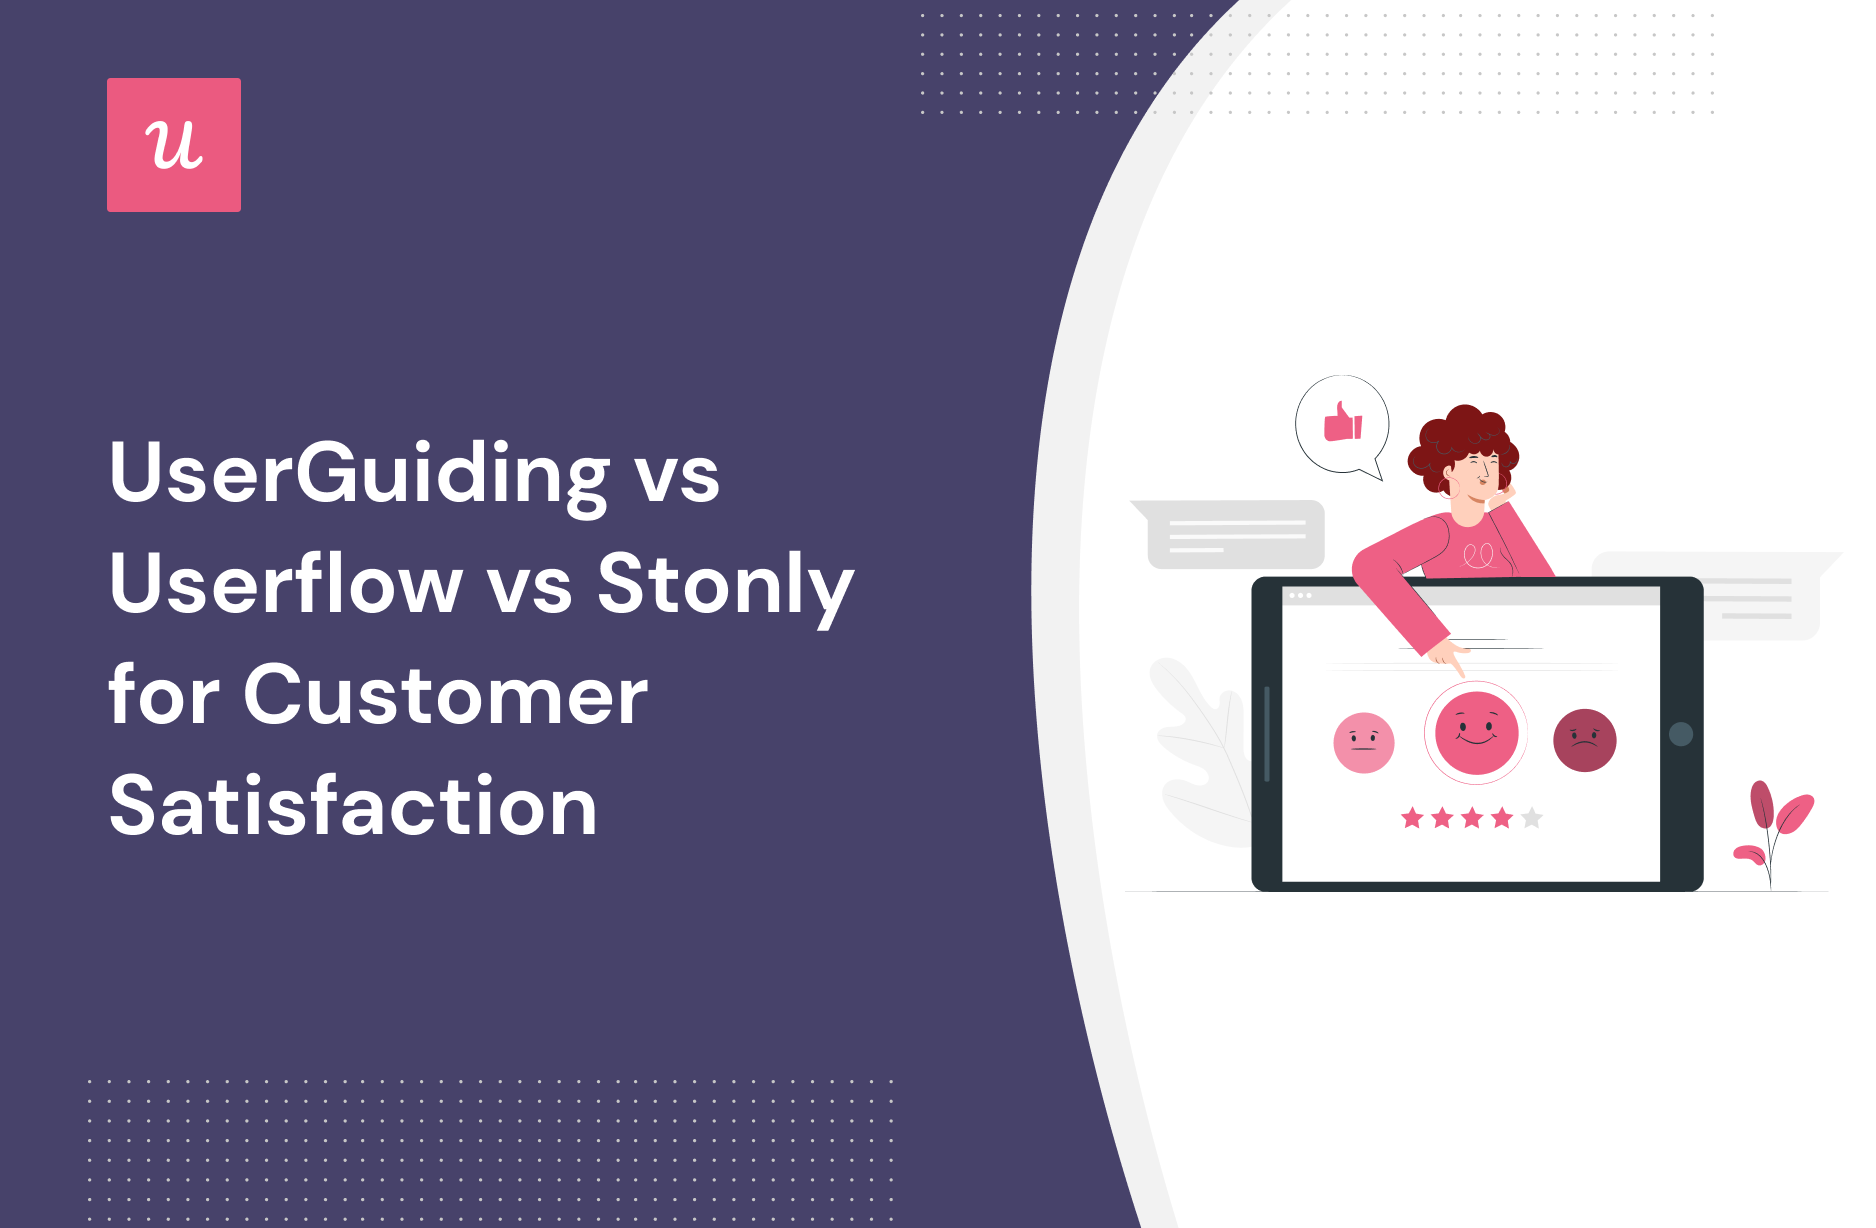 UserGuiding vs Userflow vs Stonly for Customer Satisfaction